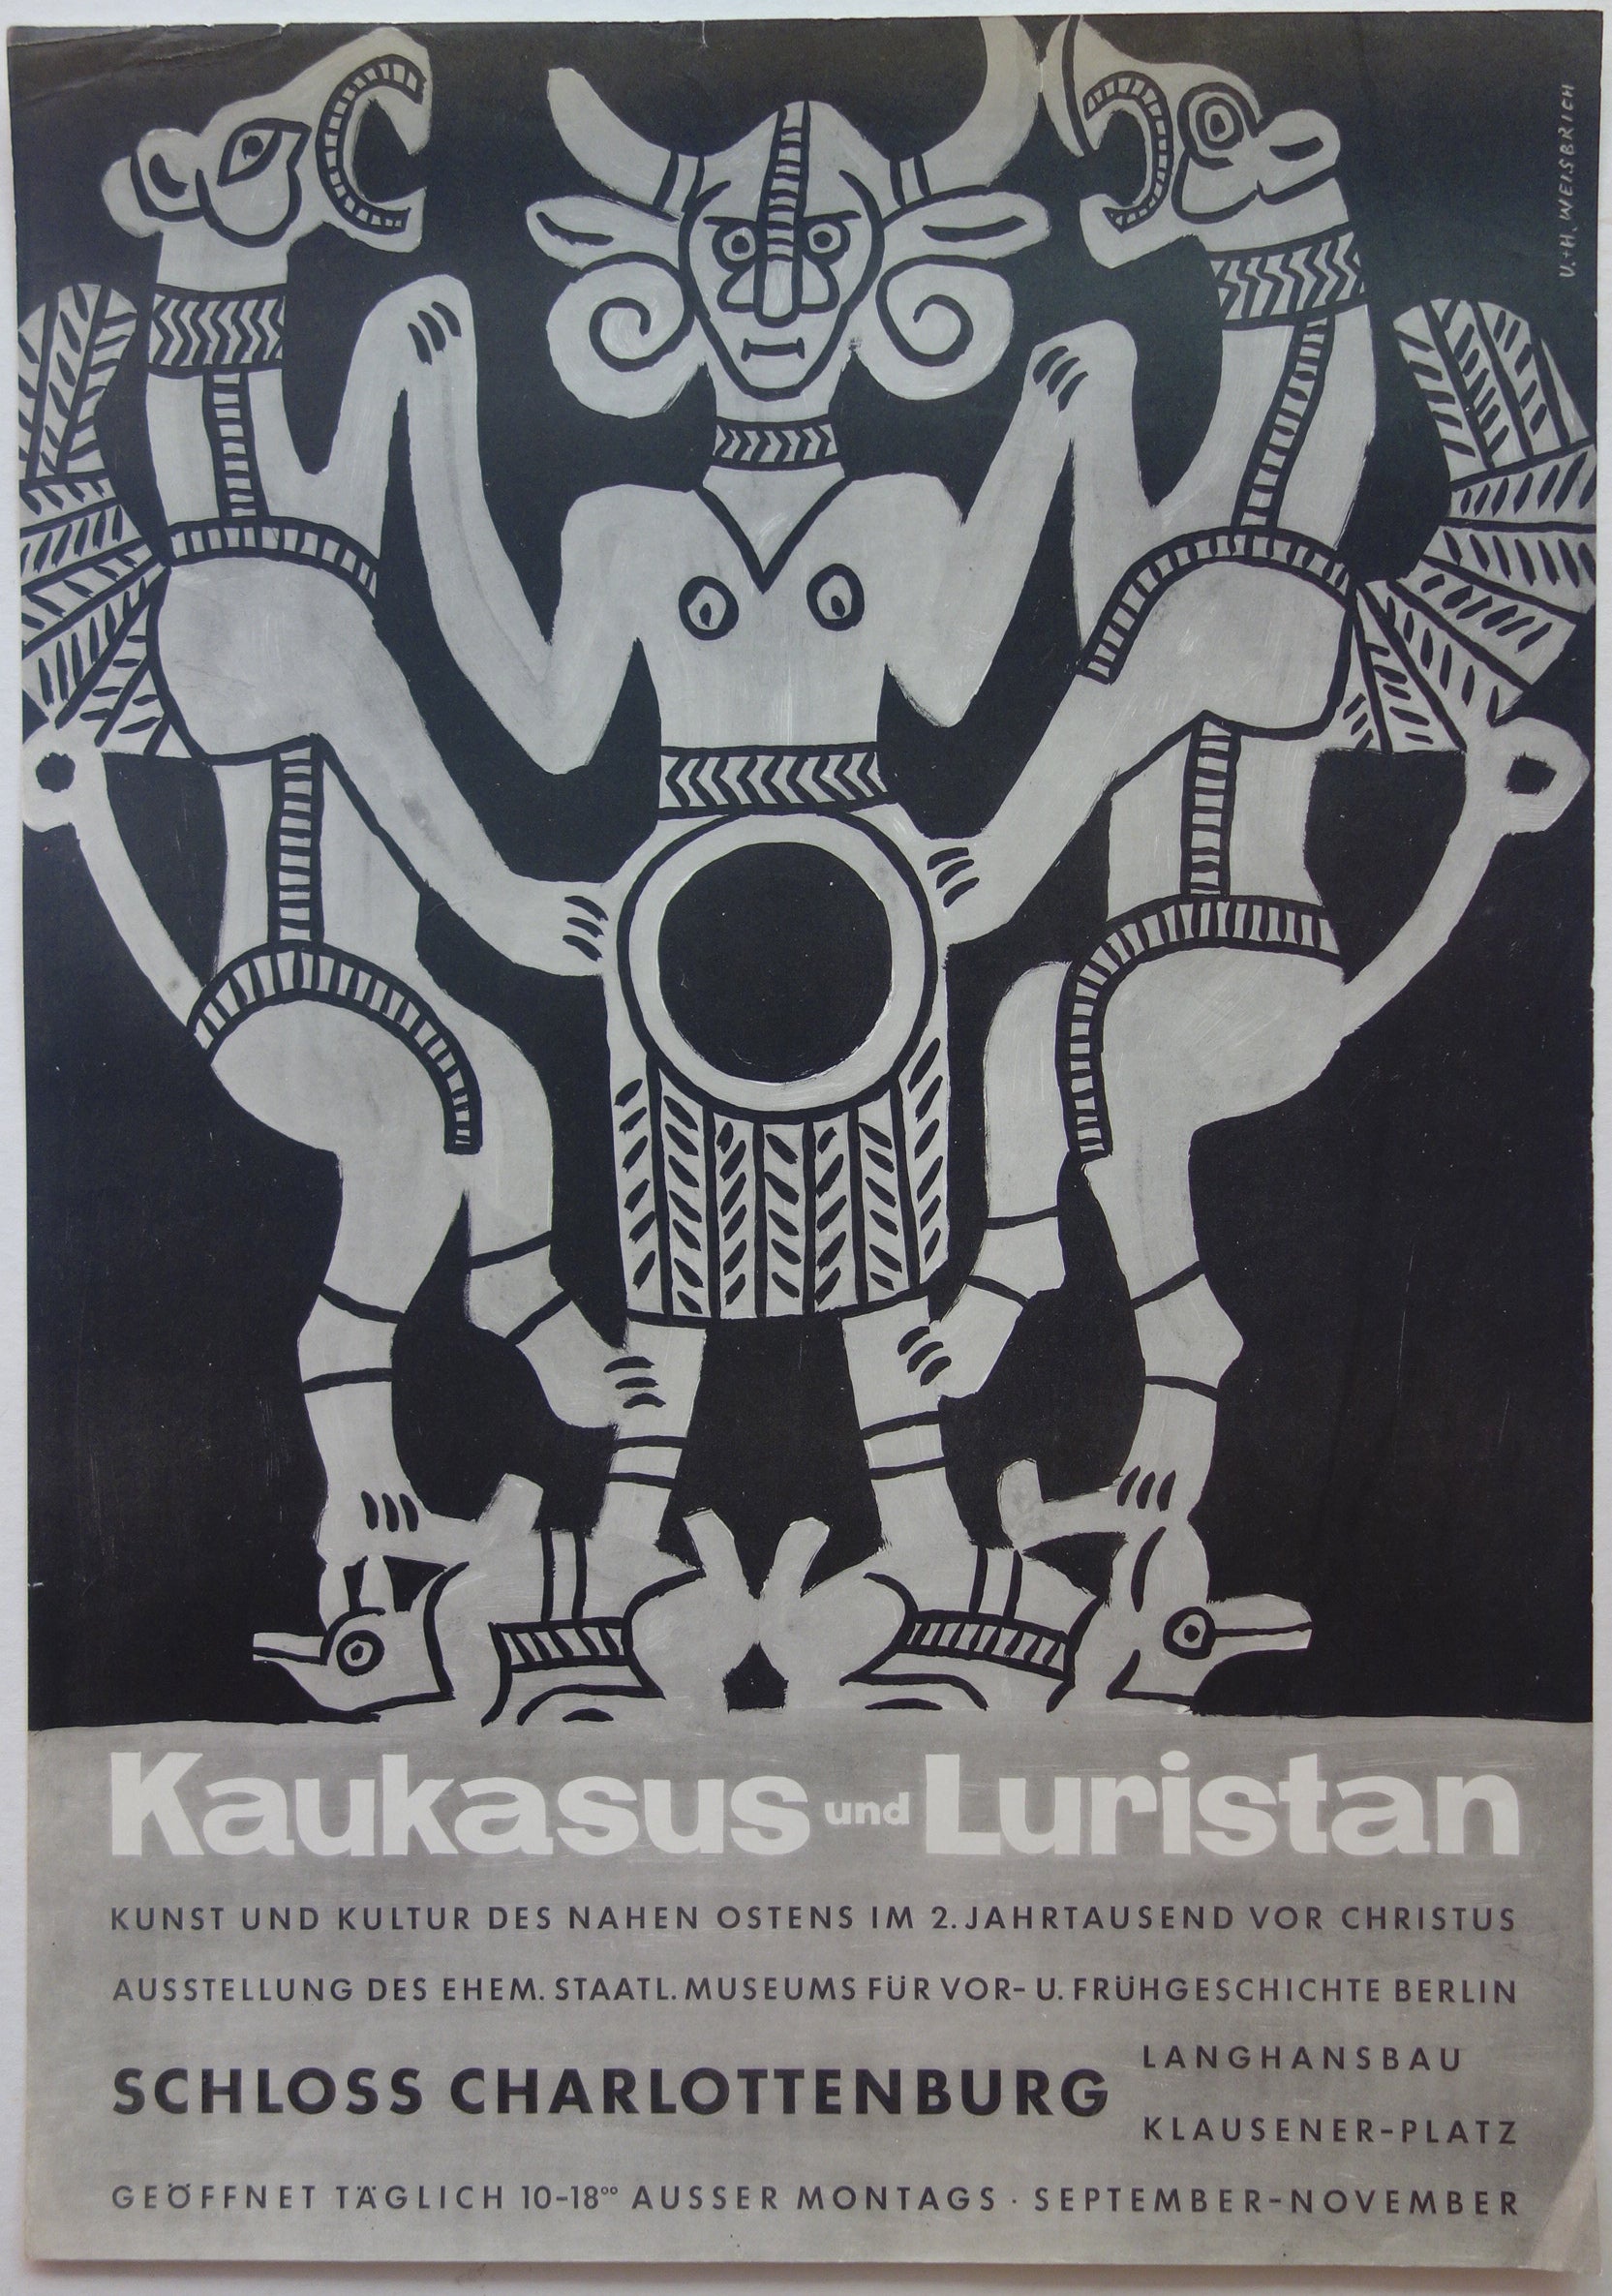 Kaukasus and Luristan